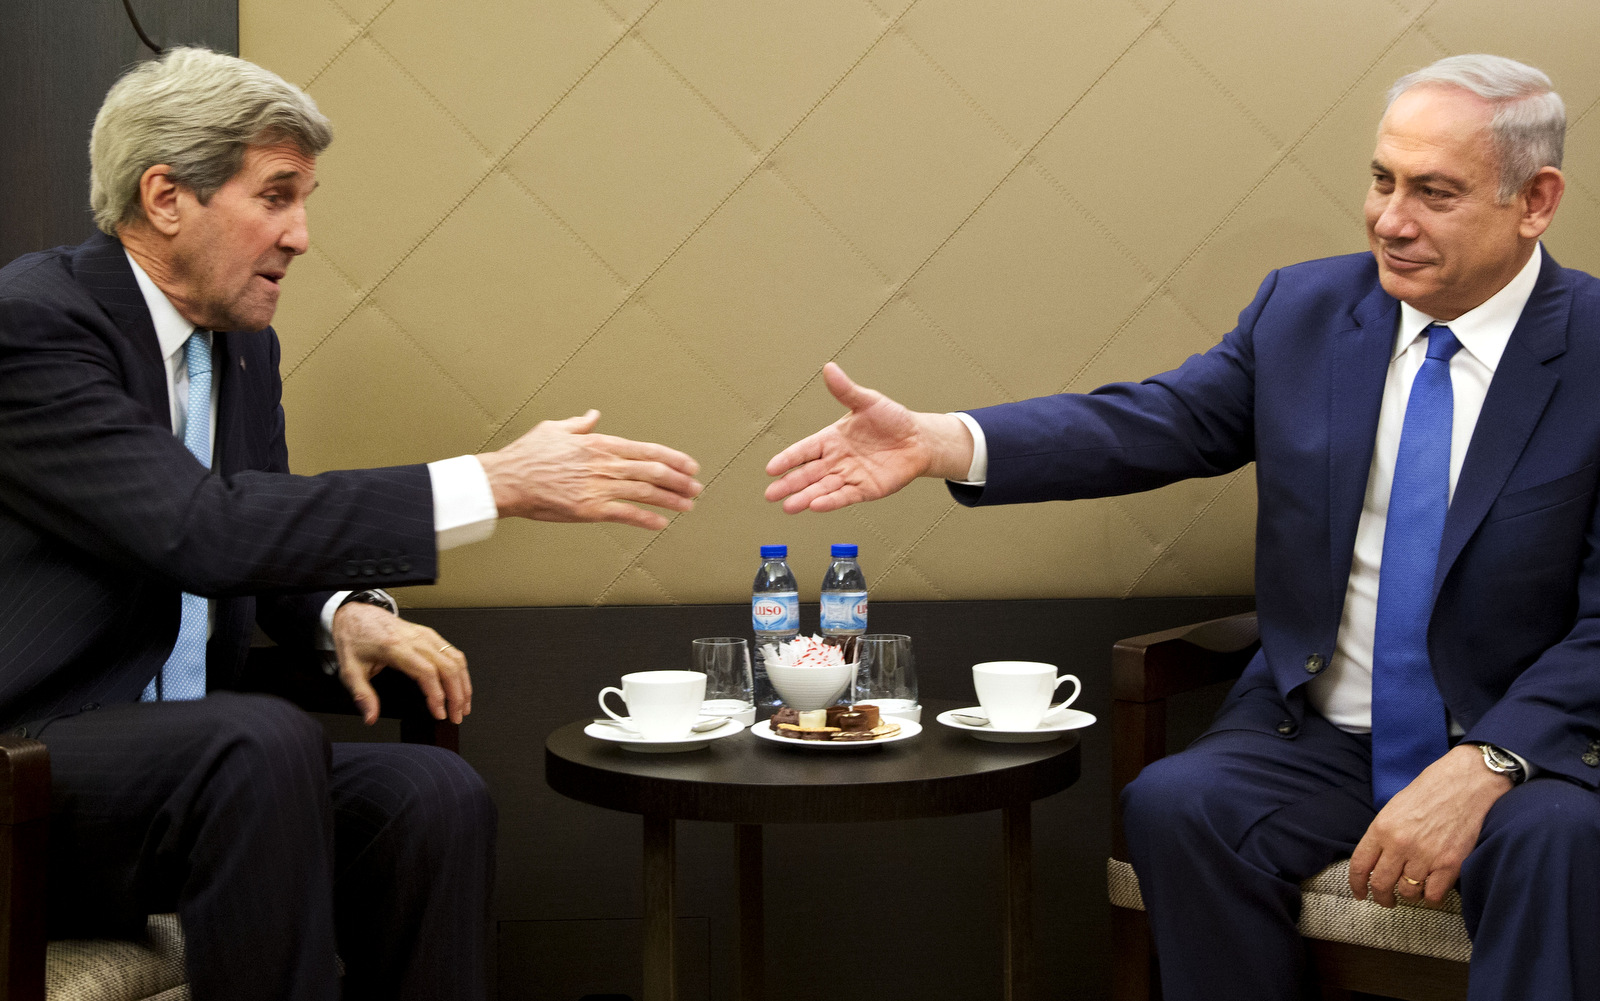 U.S. Secretary of State John Kerry, left, shakes hands with Israeli Prime Minister Benjamin Netanyahu during the 2016 World Economic Forum in Davos, Switzerland, on Thursday, Jan. 21, 2016. (AP Photo/Jacquelyn Martin, Pool)